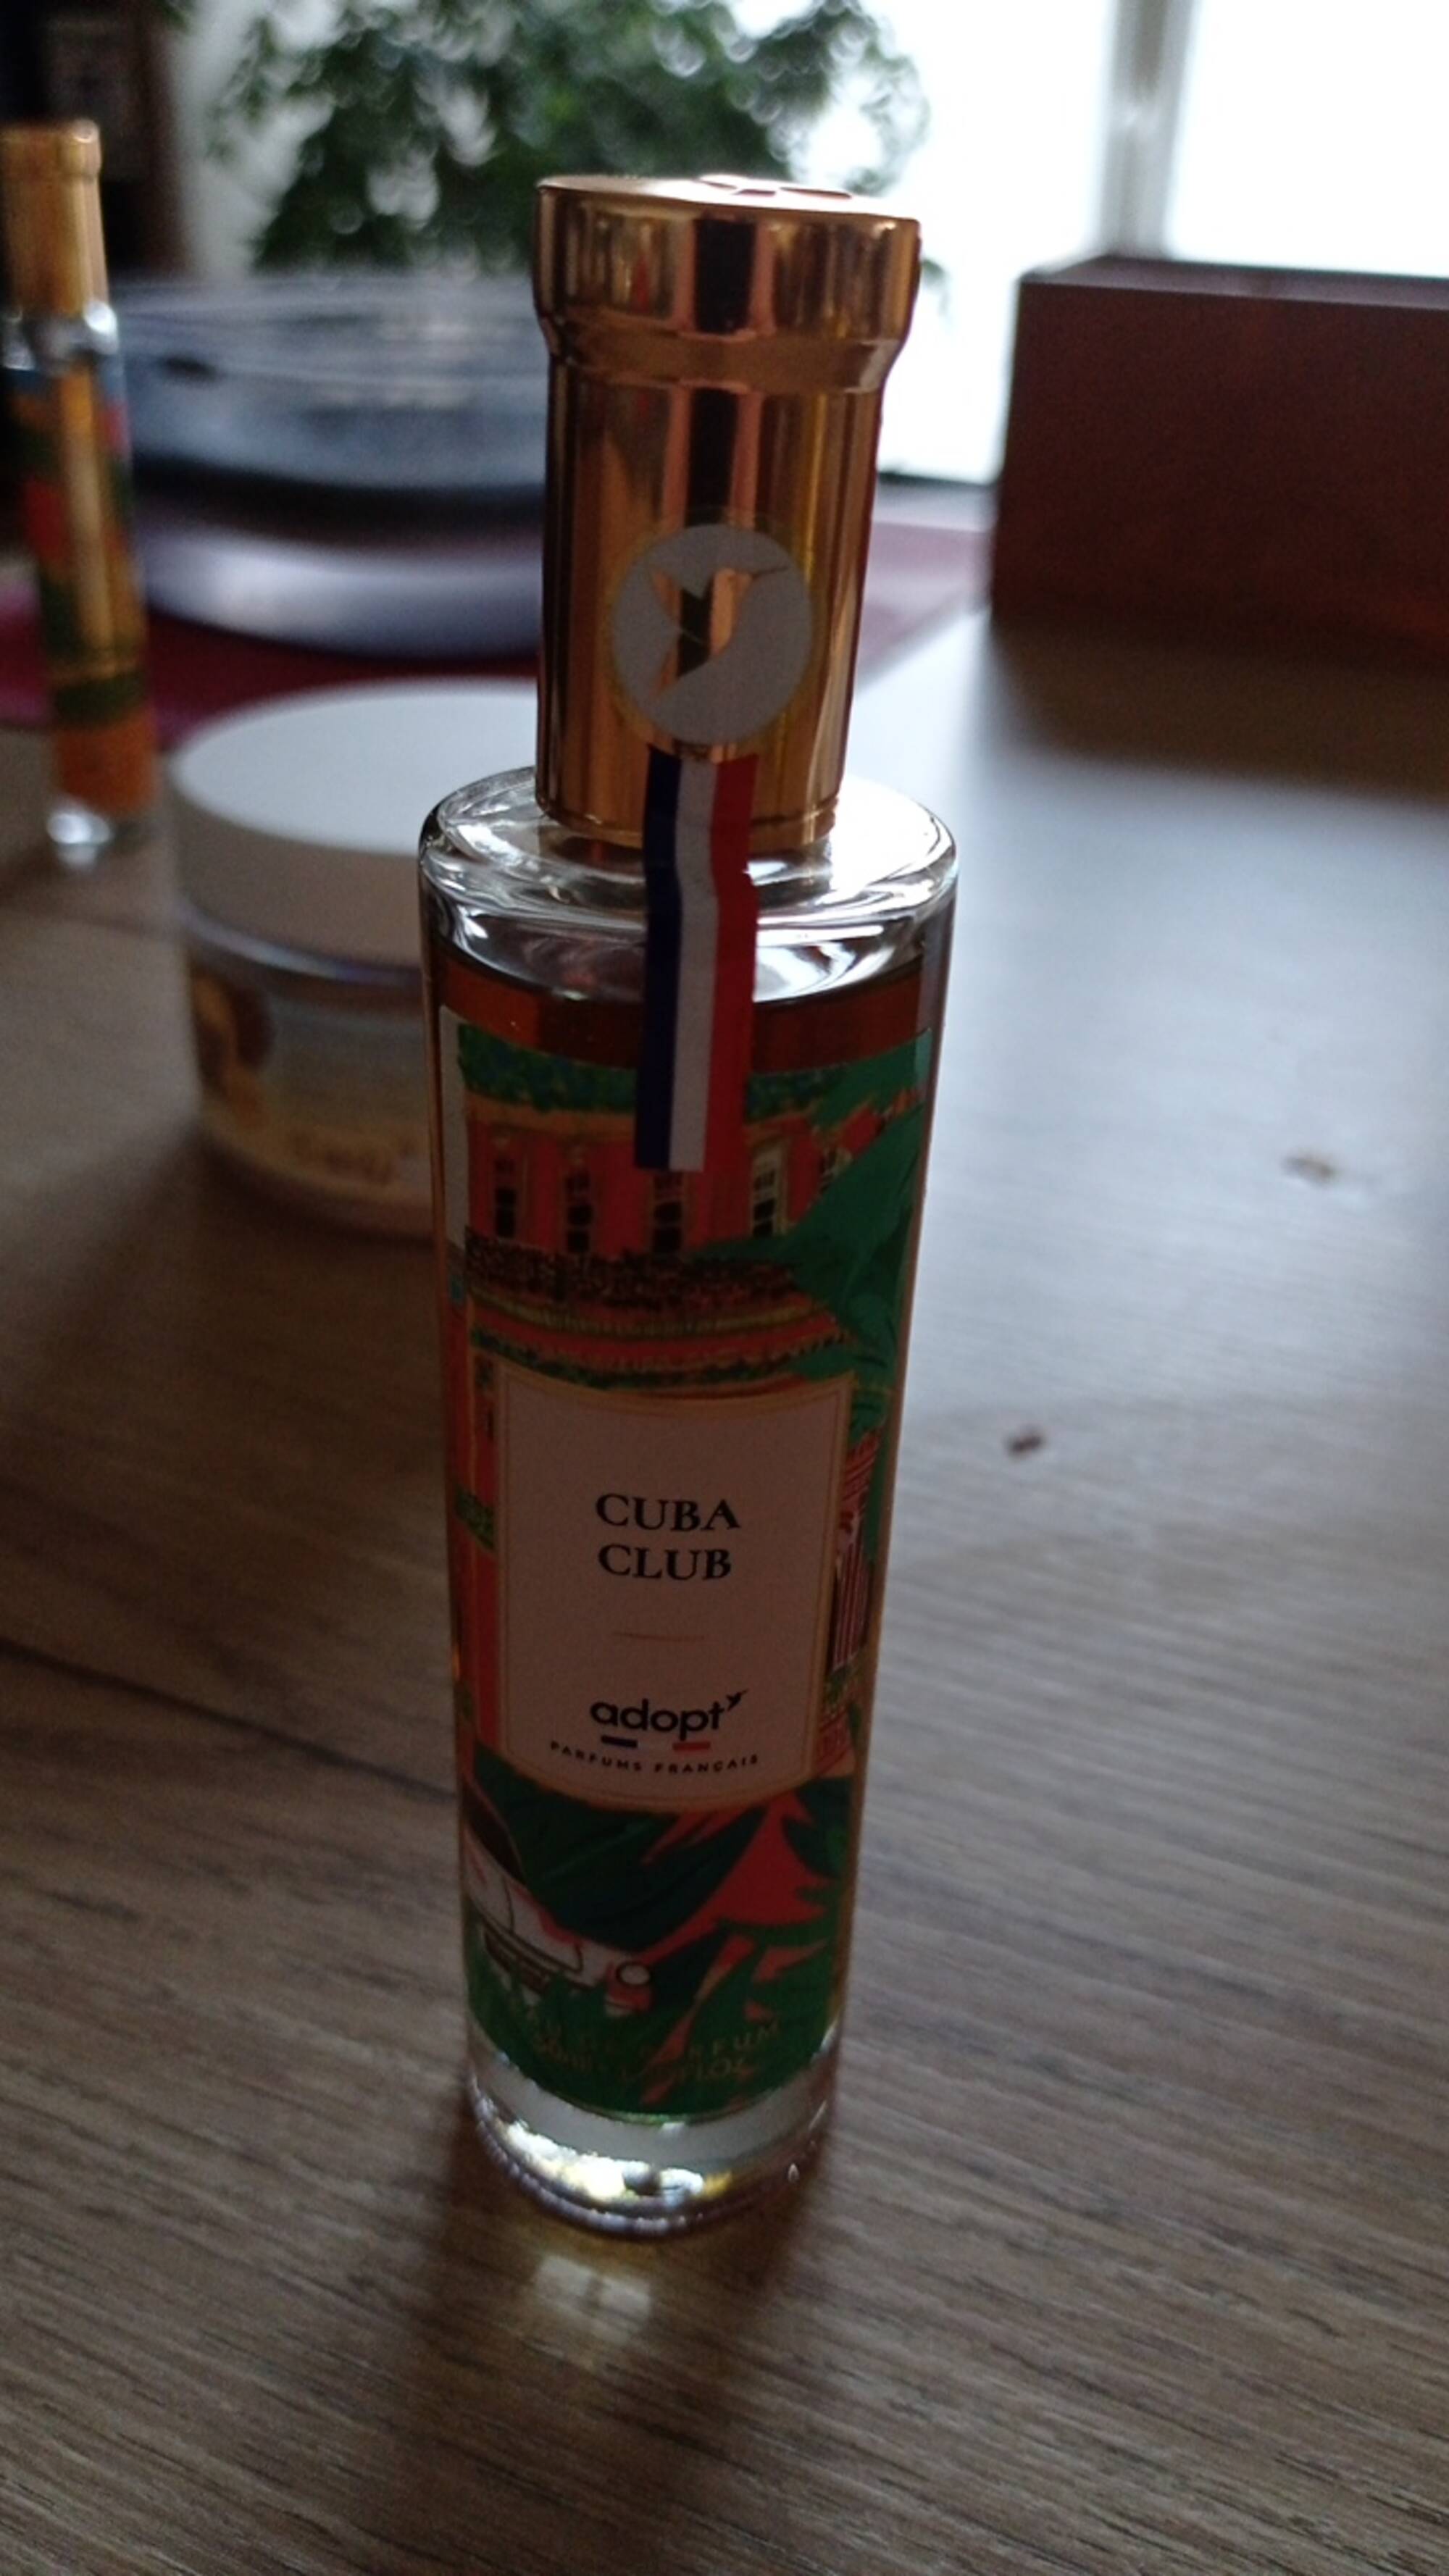 ADOPT' - Cuba club - Eau de parfum